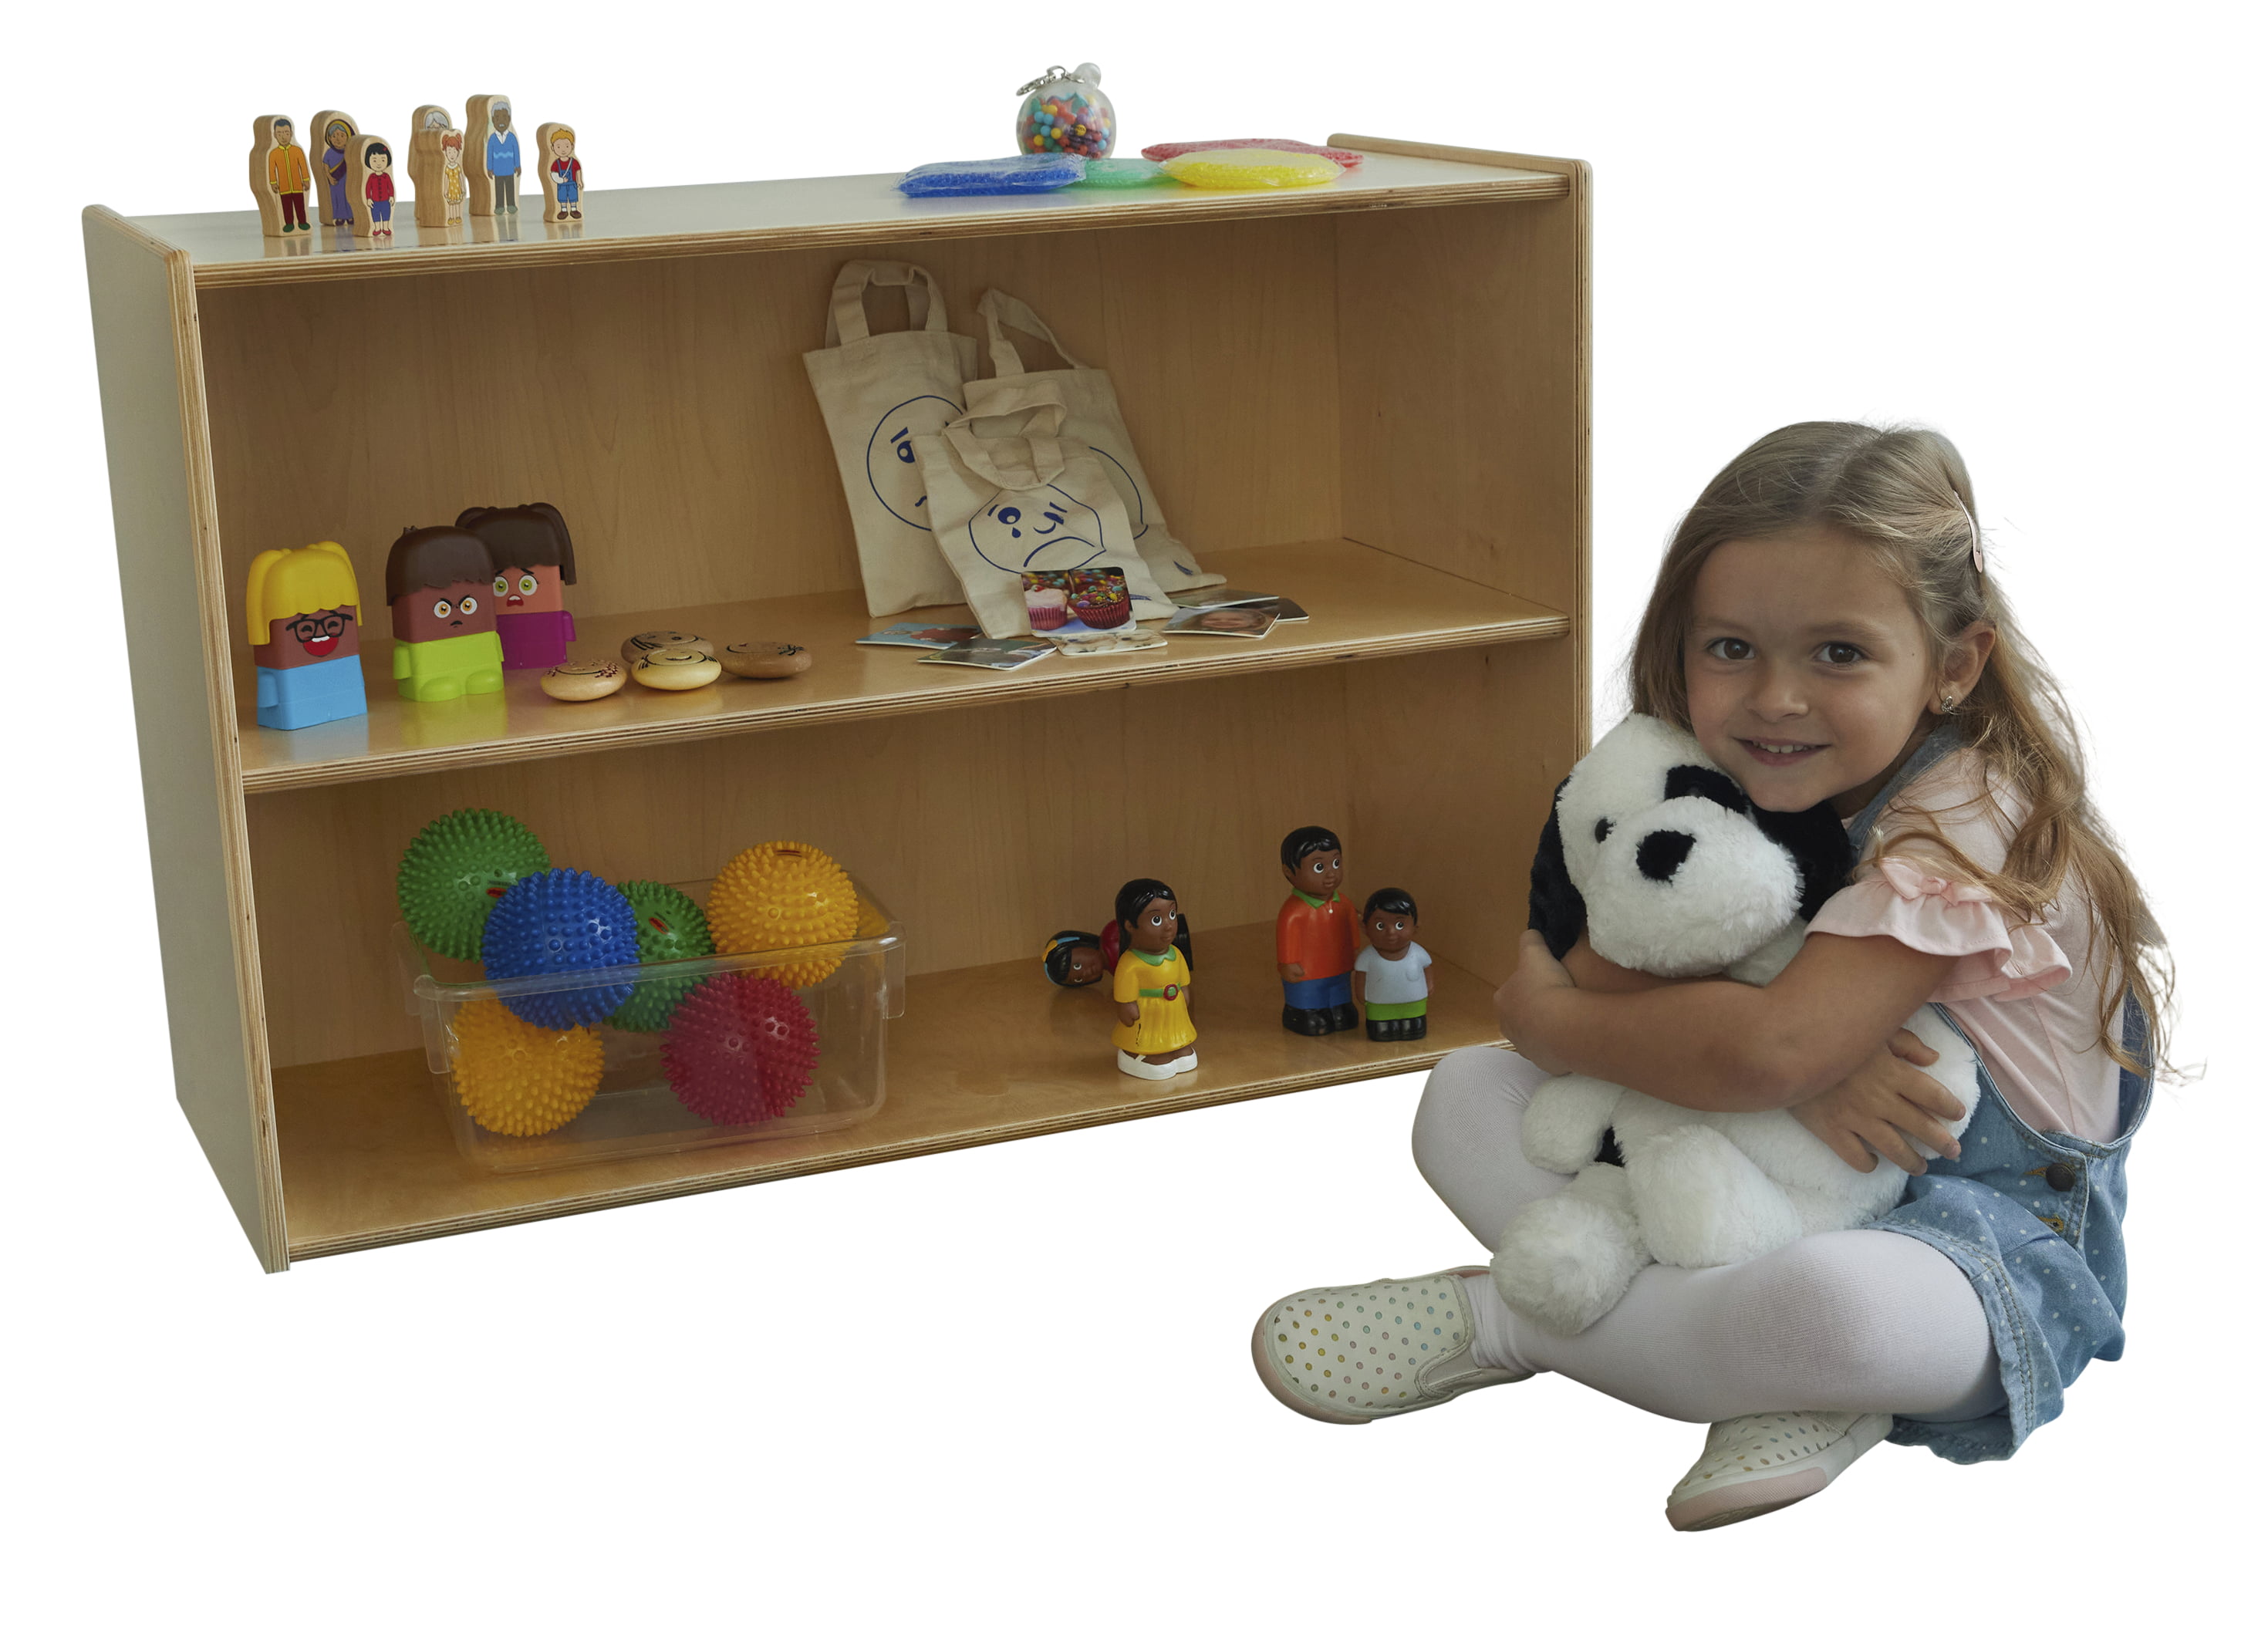 Childcraft Deep Shelf Storage Unit, 3 Shelves, 35-3/4 x 14-3/4 x 36 in